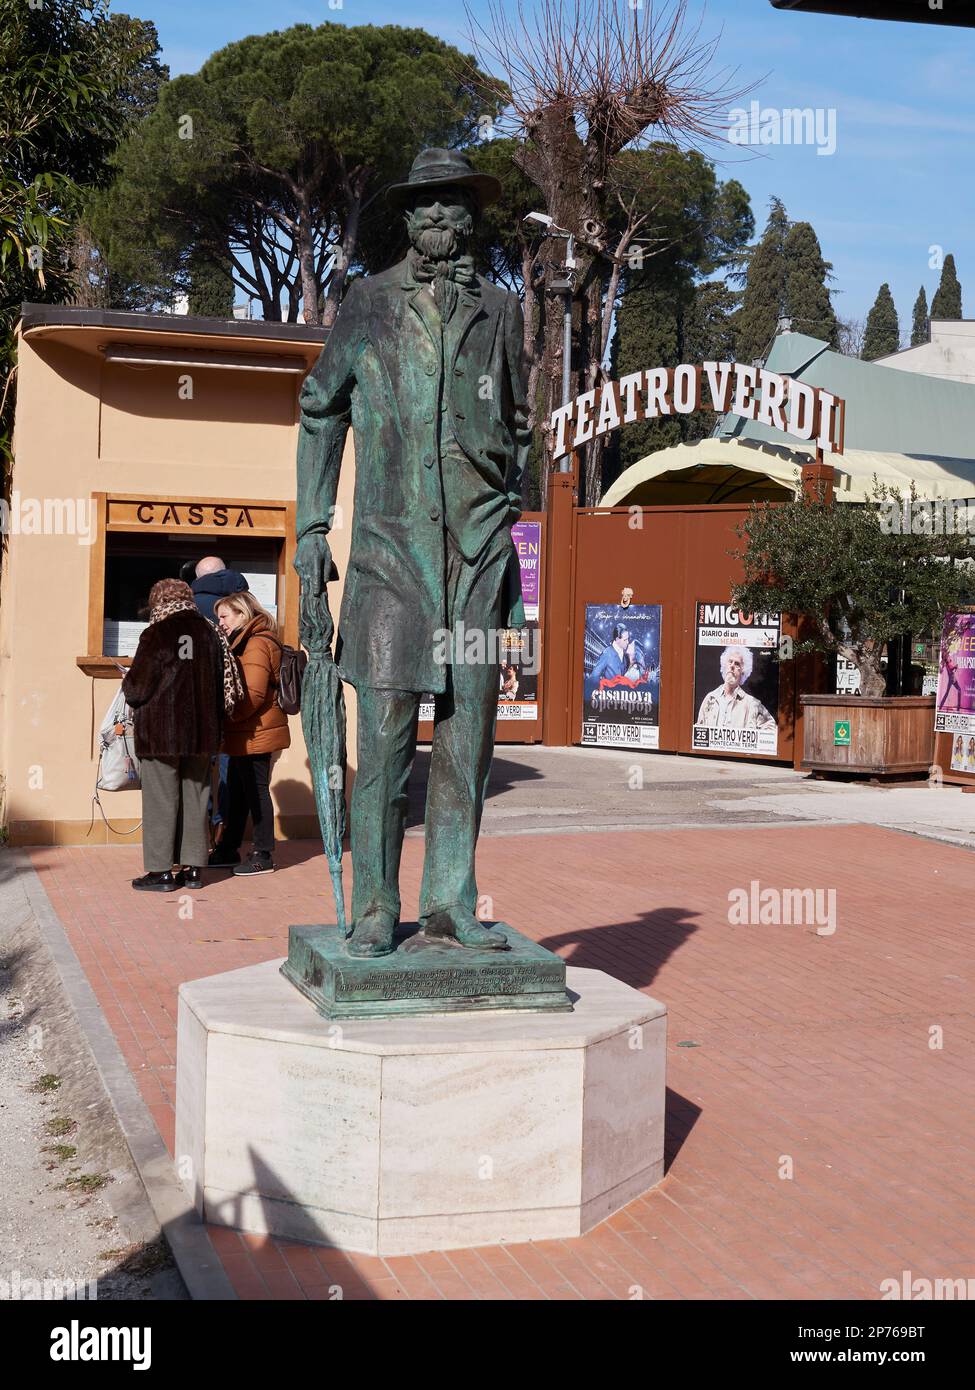 Statue of Giuseppe Verdi in front of the Teatro Verdi, Montecatini Terme, Italy Stock Photo